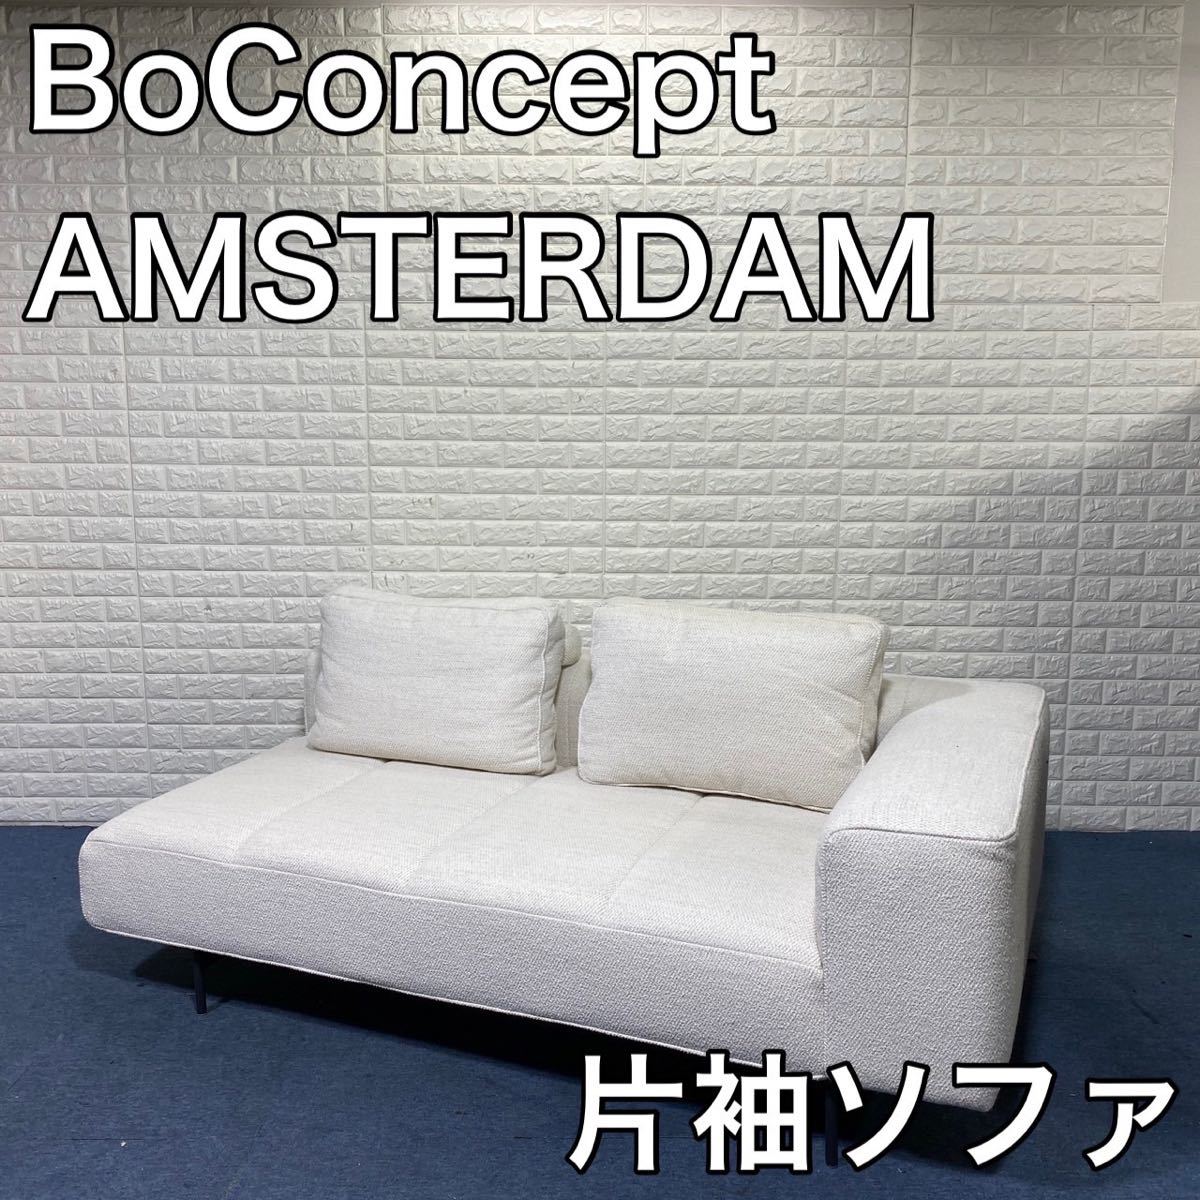 BoConcept AMSTERDAM 片袖ソファ ファブリック A886 kycc.co.jp